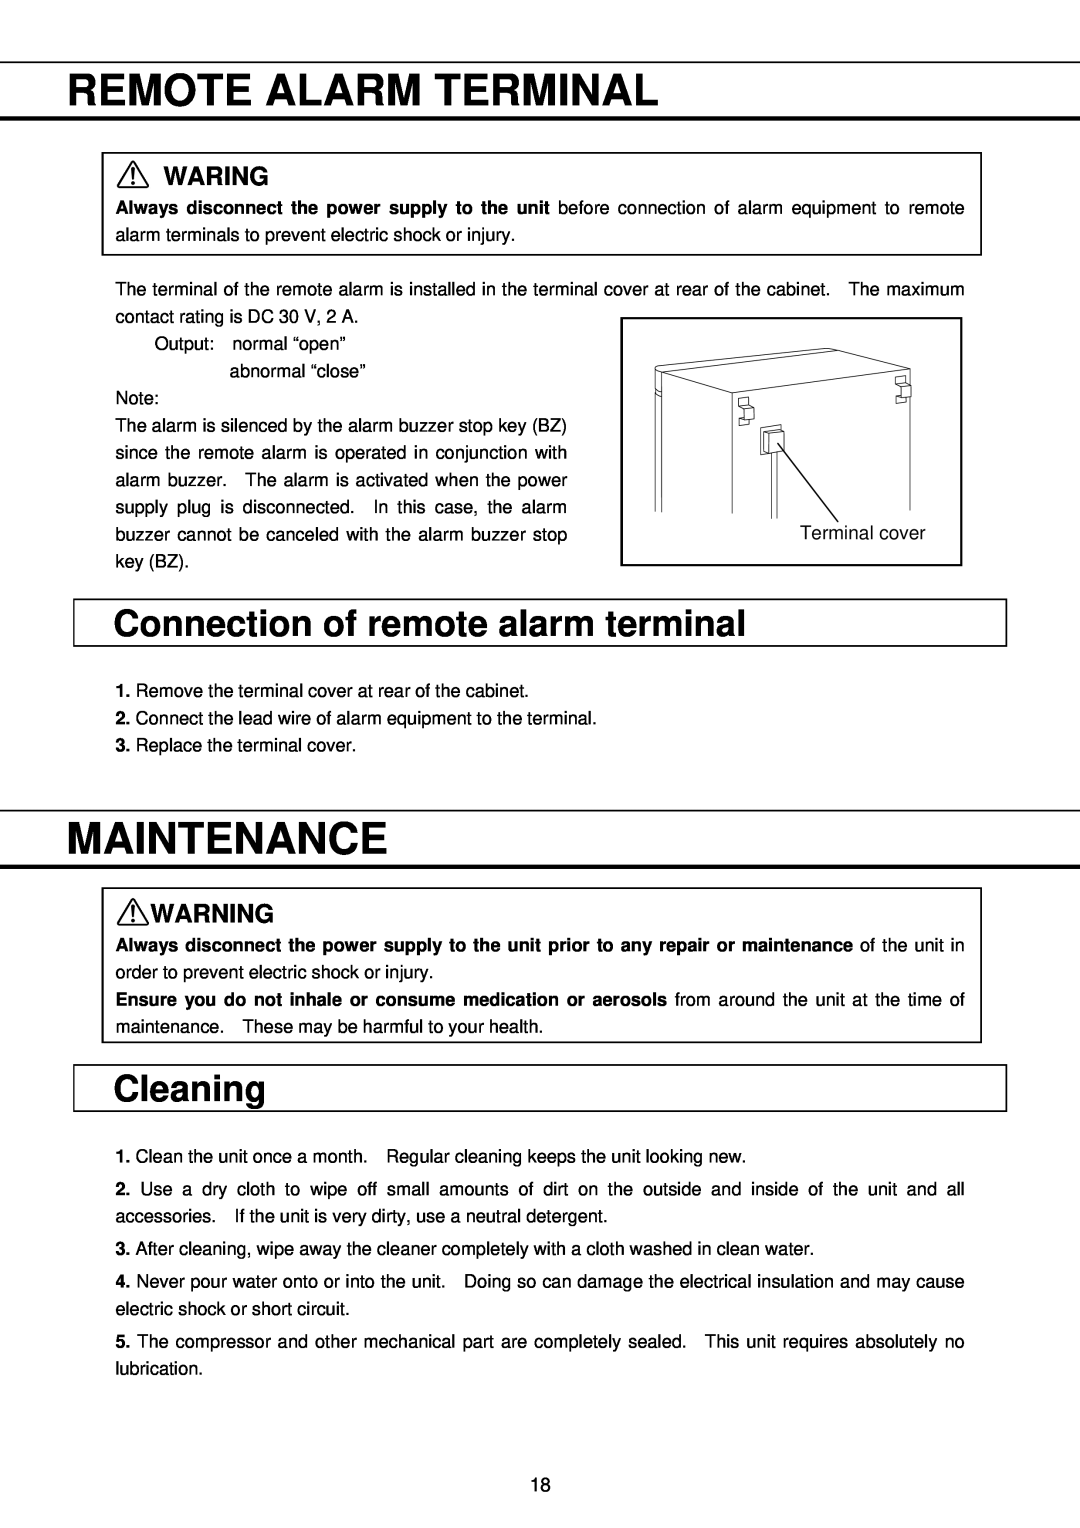 Sanyo MPR-411FR Remote Alarm Terminal, Maintenance, Connection of remote alarm terminal, Cleaning, Waring 